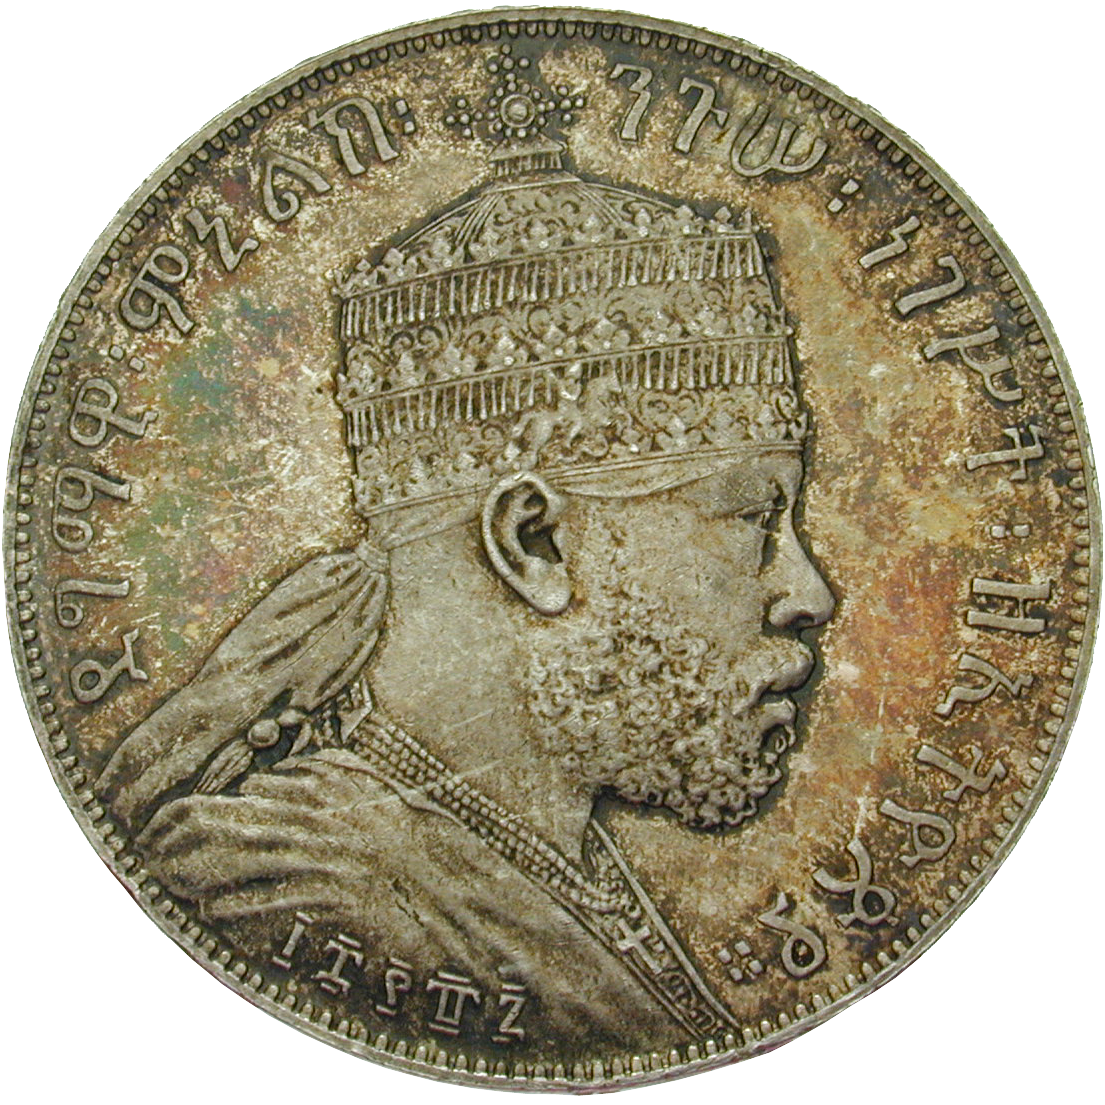 Empire of Ethiopia, Menelik II, Birr (obverse)